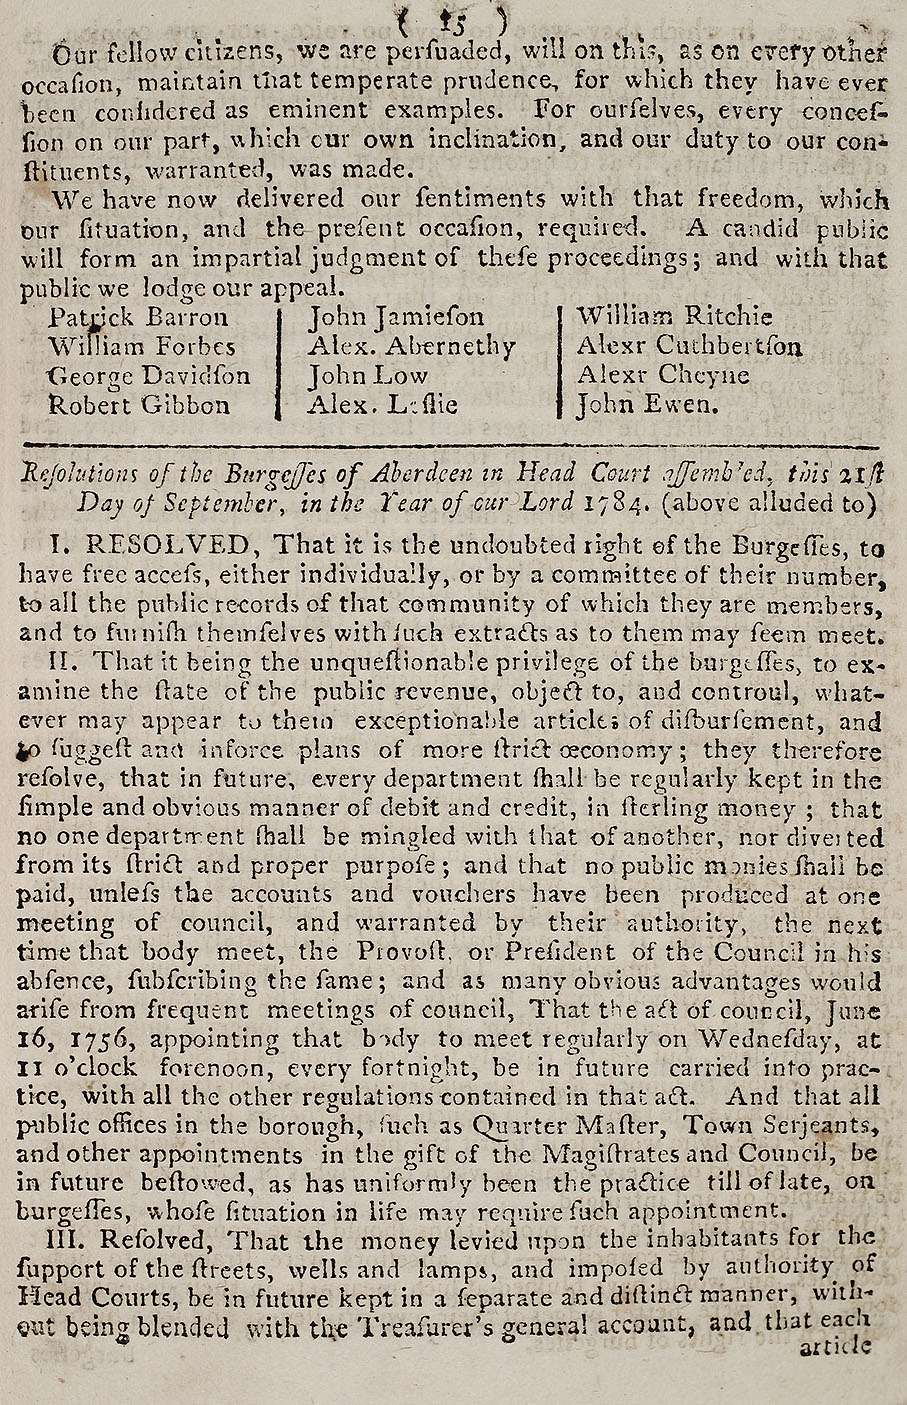 RAD093, Proceedings of the Burgesses of Aberdeen 